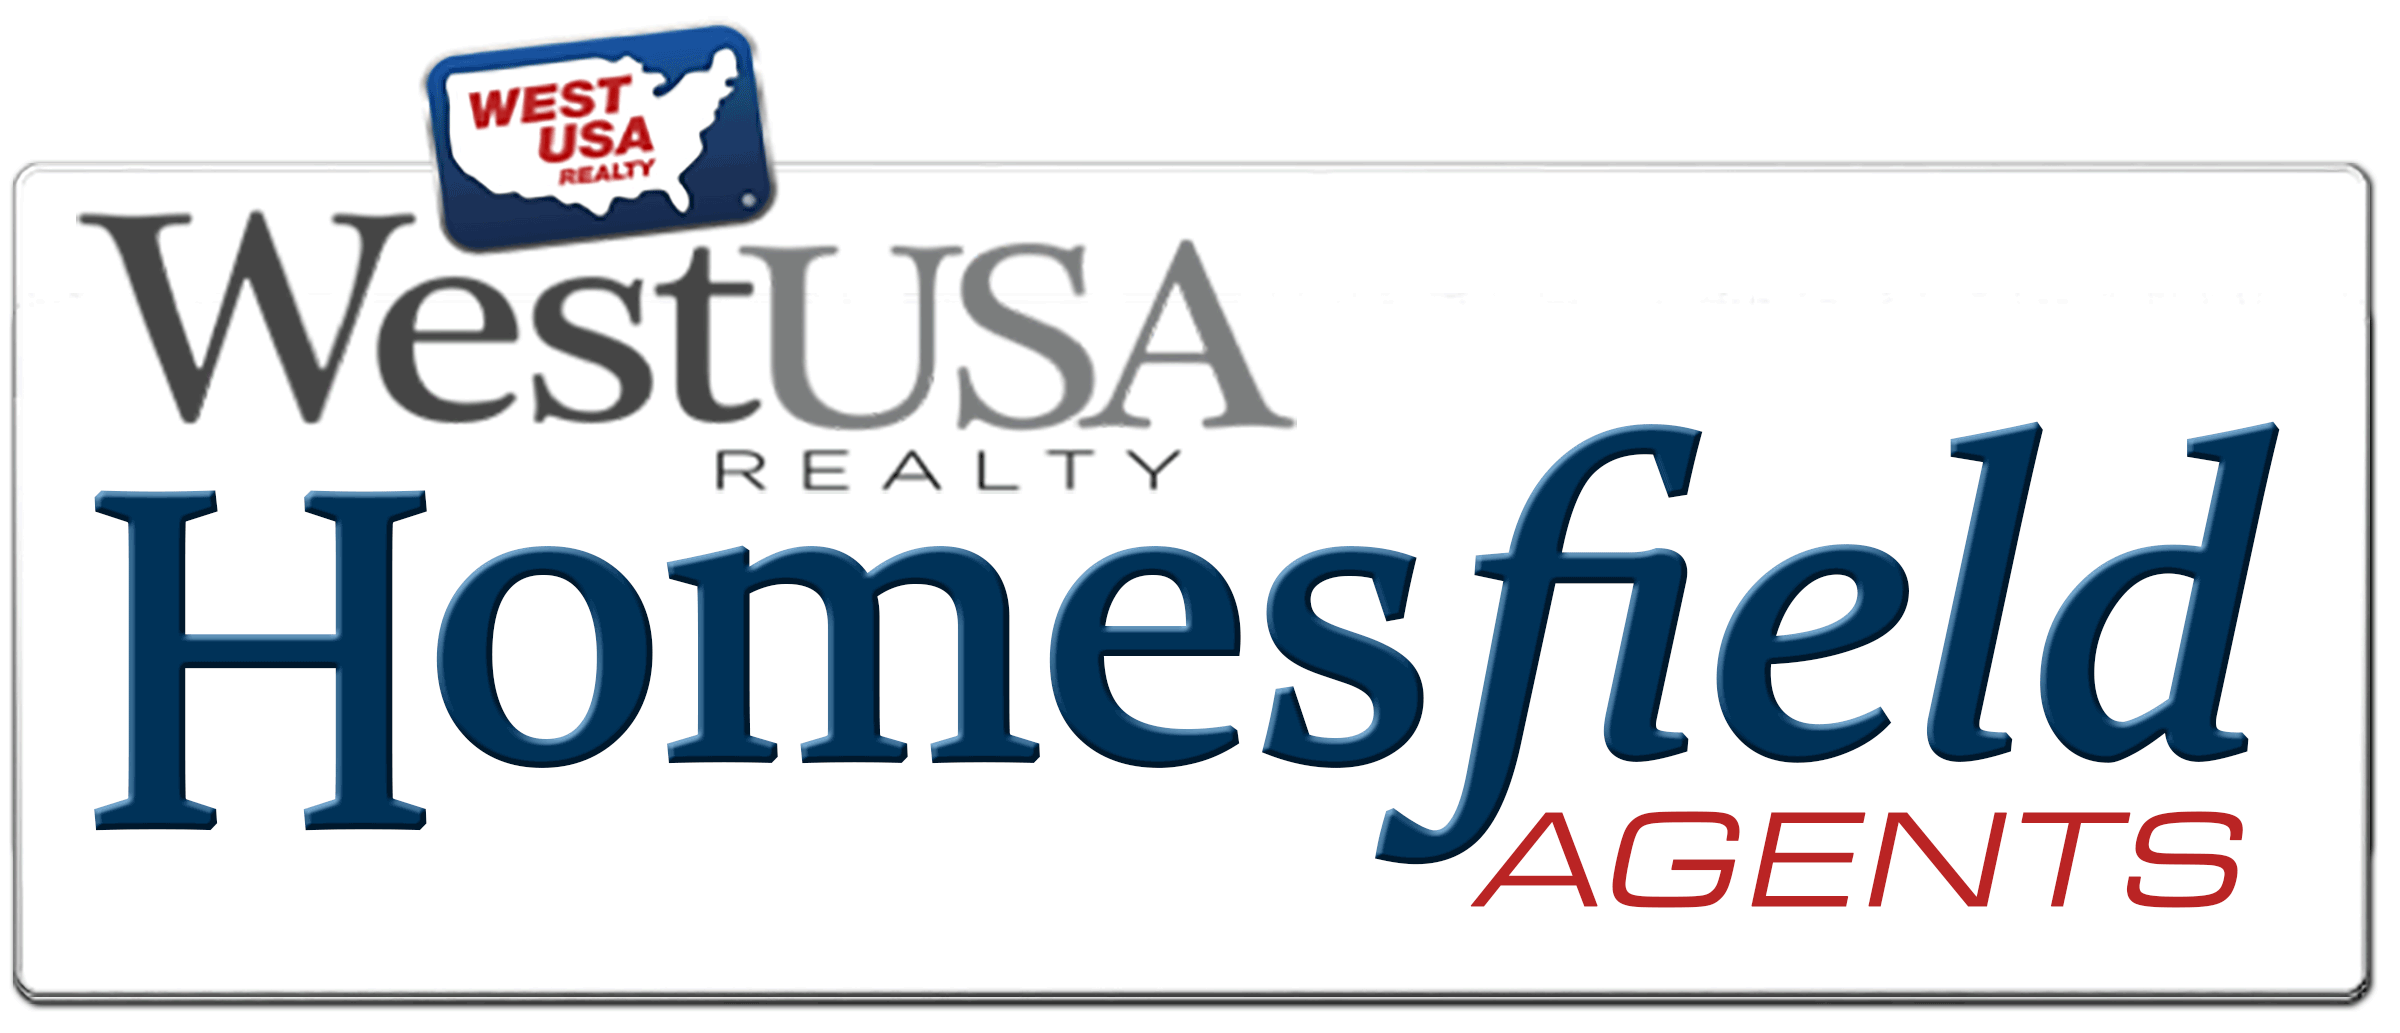 West USA Realty's Homesfield Agents in Phoenix Arizona